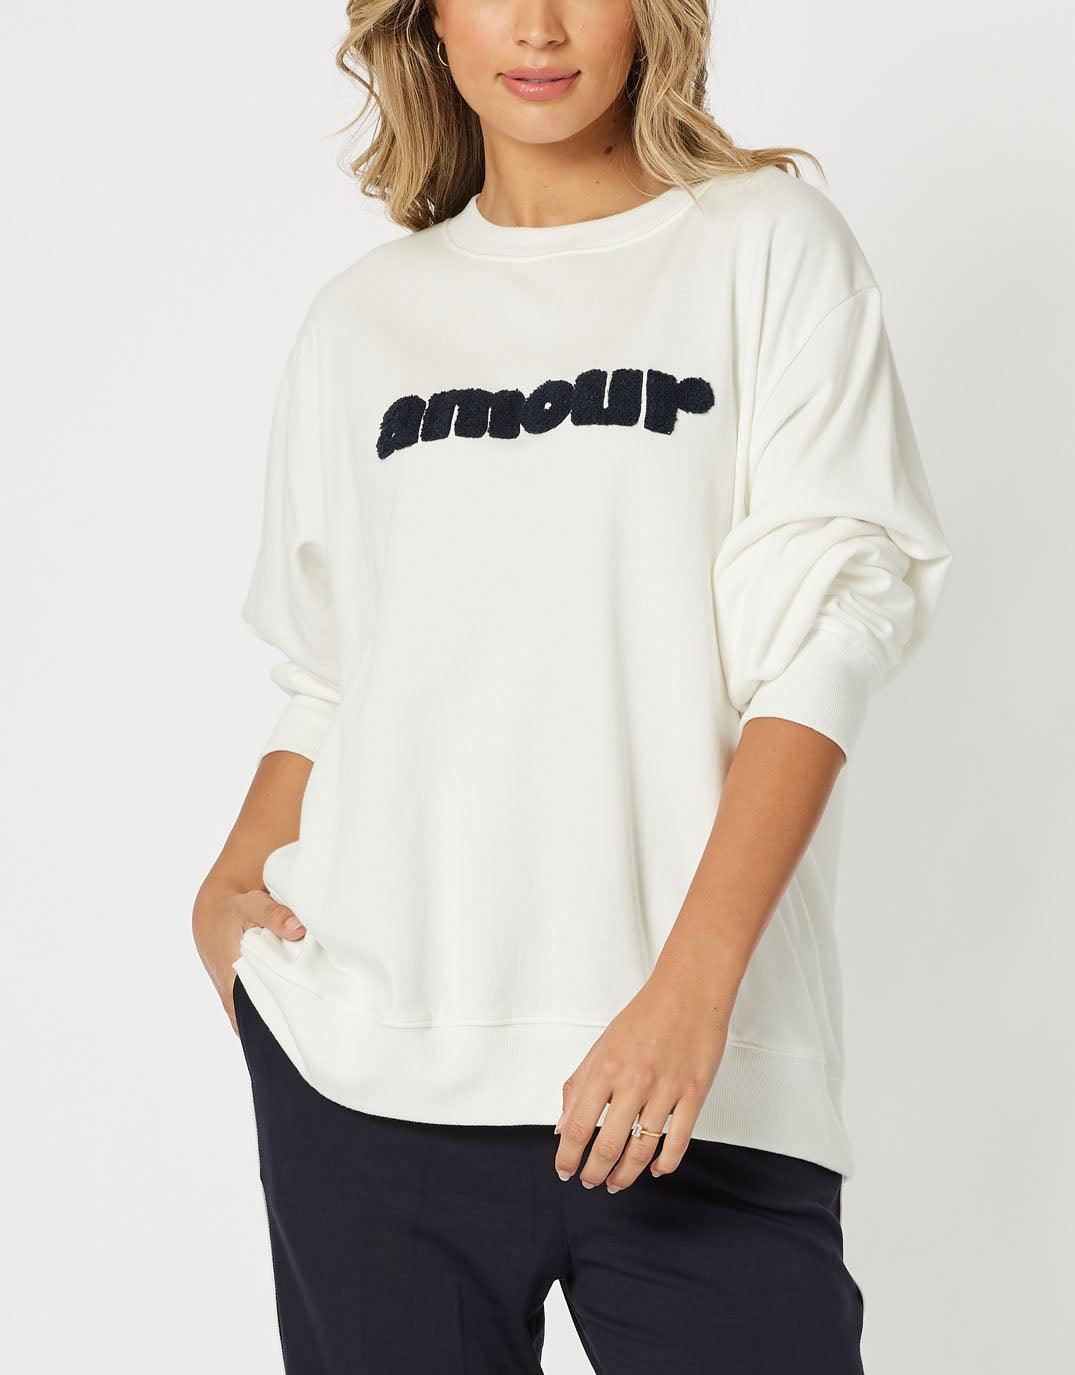 Threadz - Amour Sweatshirt - White - paulaglazebrook Jumpers